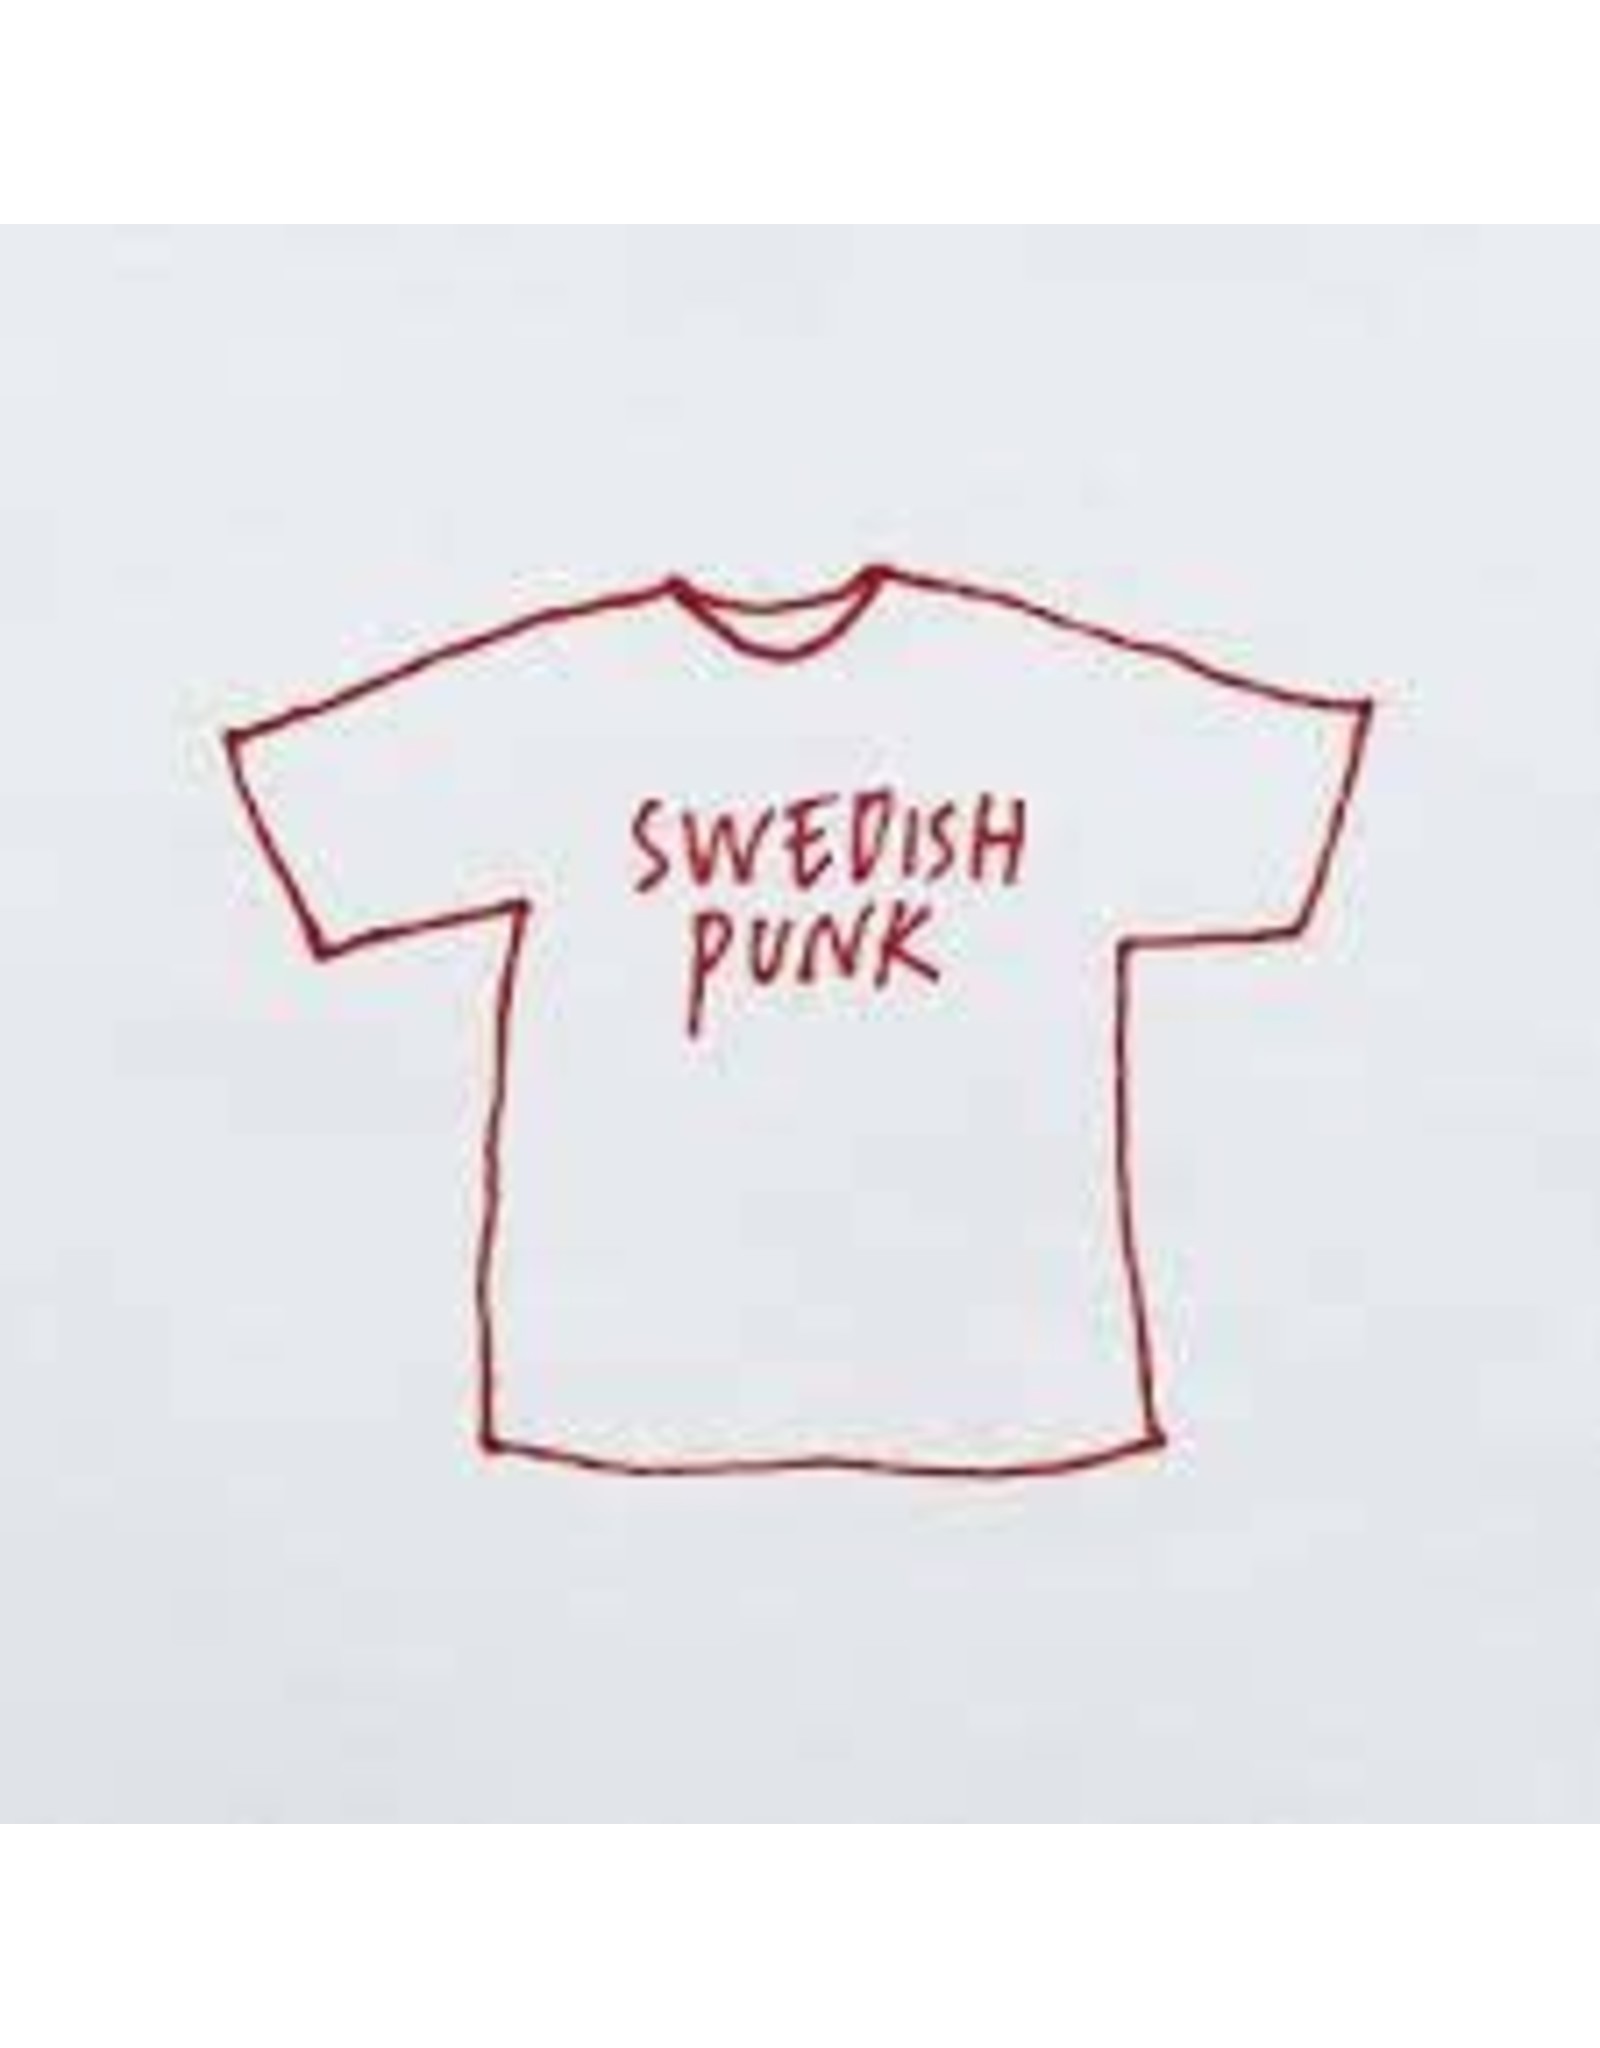 Kindsight - Swedish Punk LP